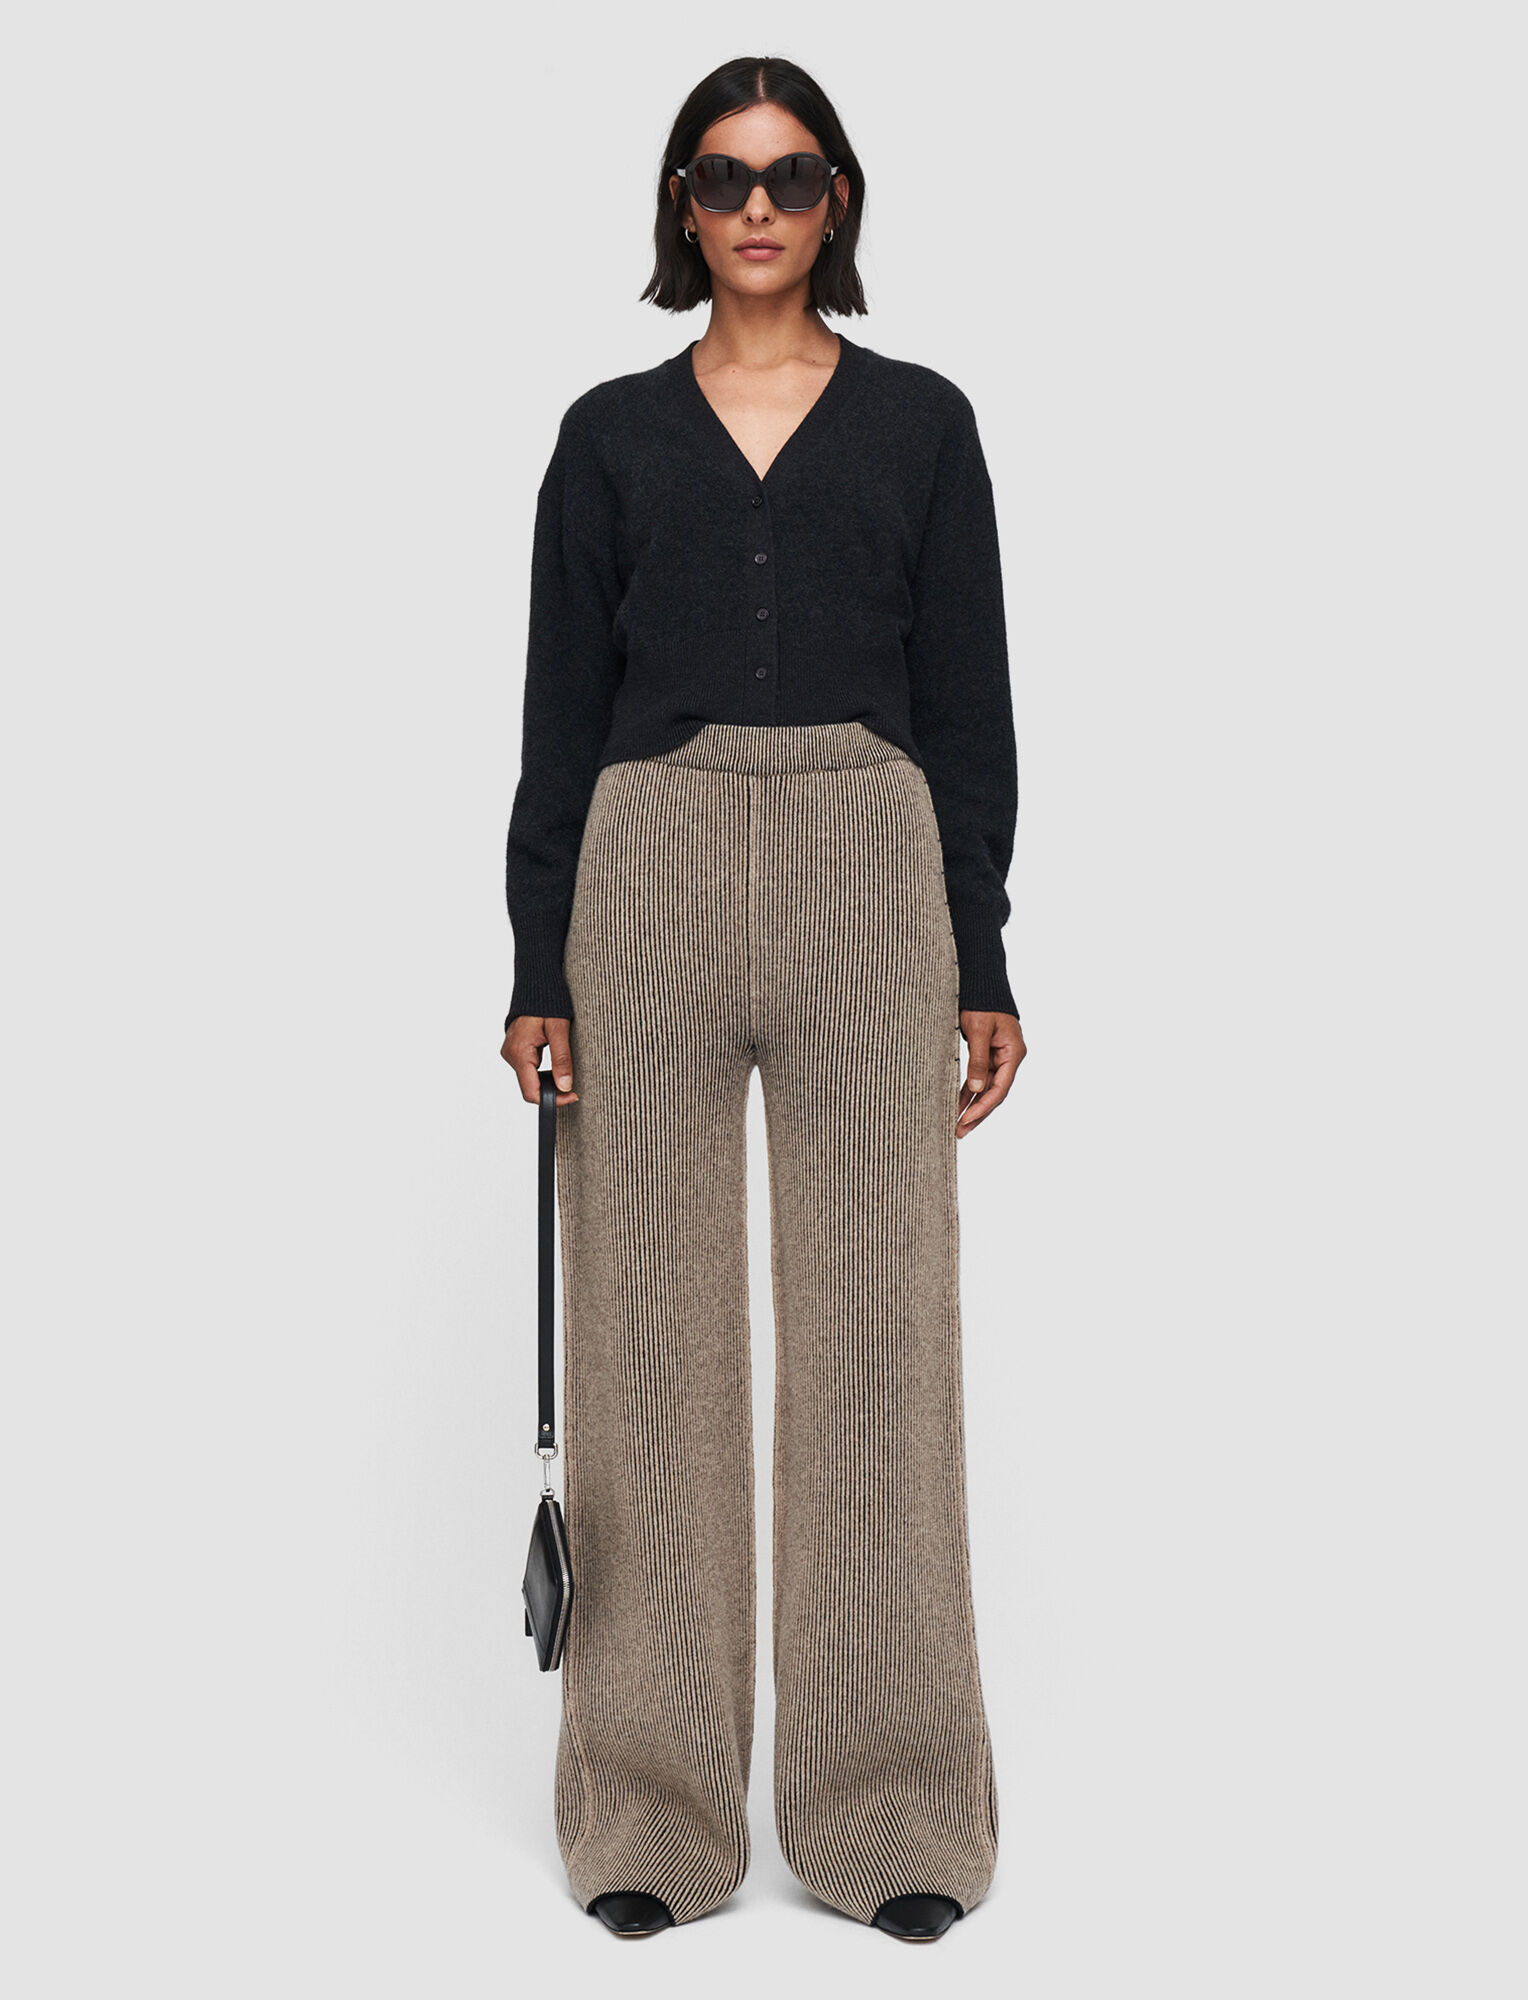 Joseph, Plated Knit Trousers – Shorter Length, in Pewter/Black